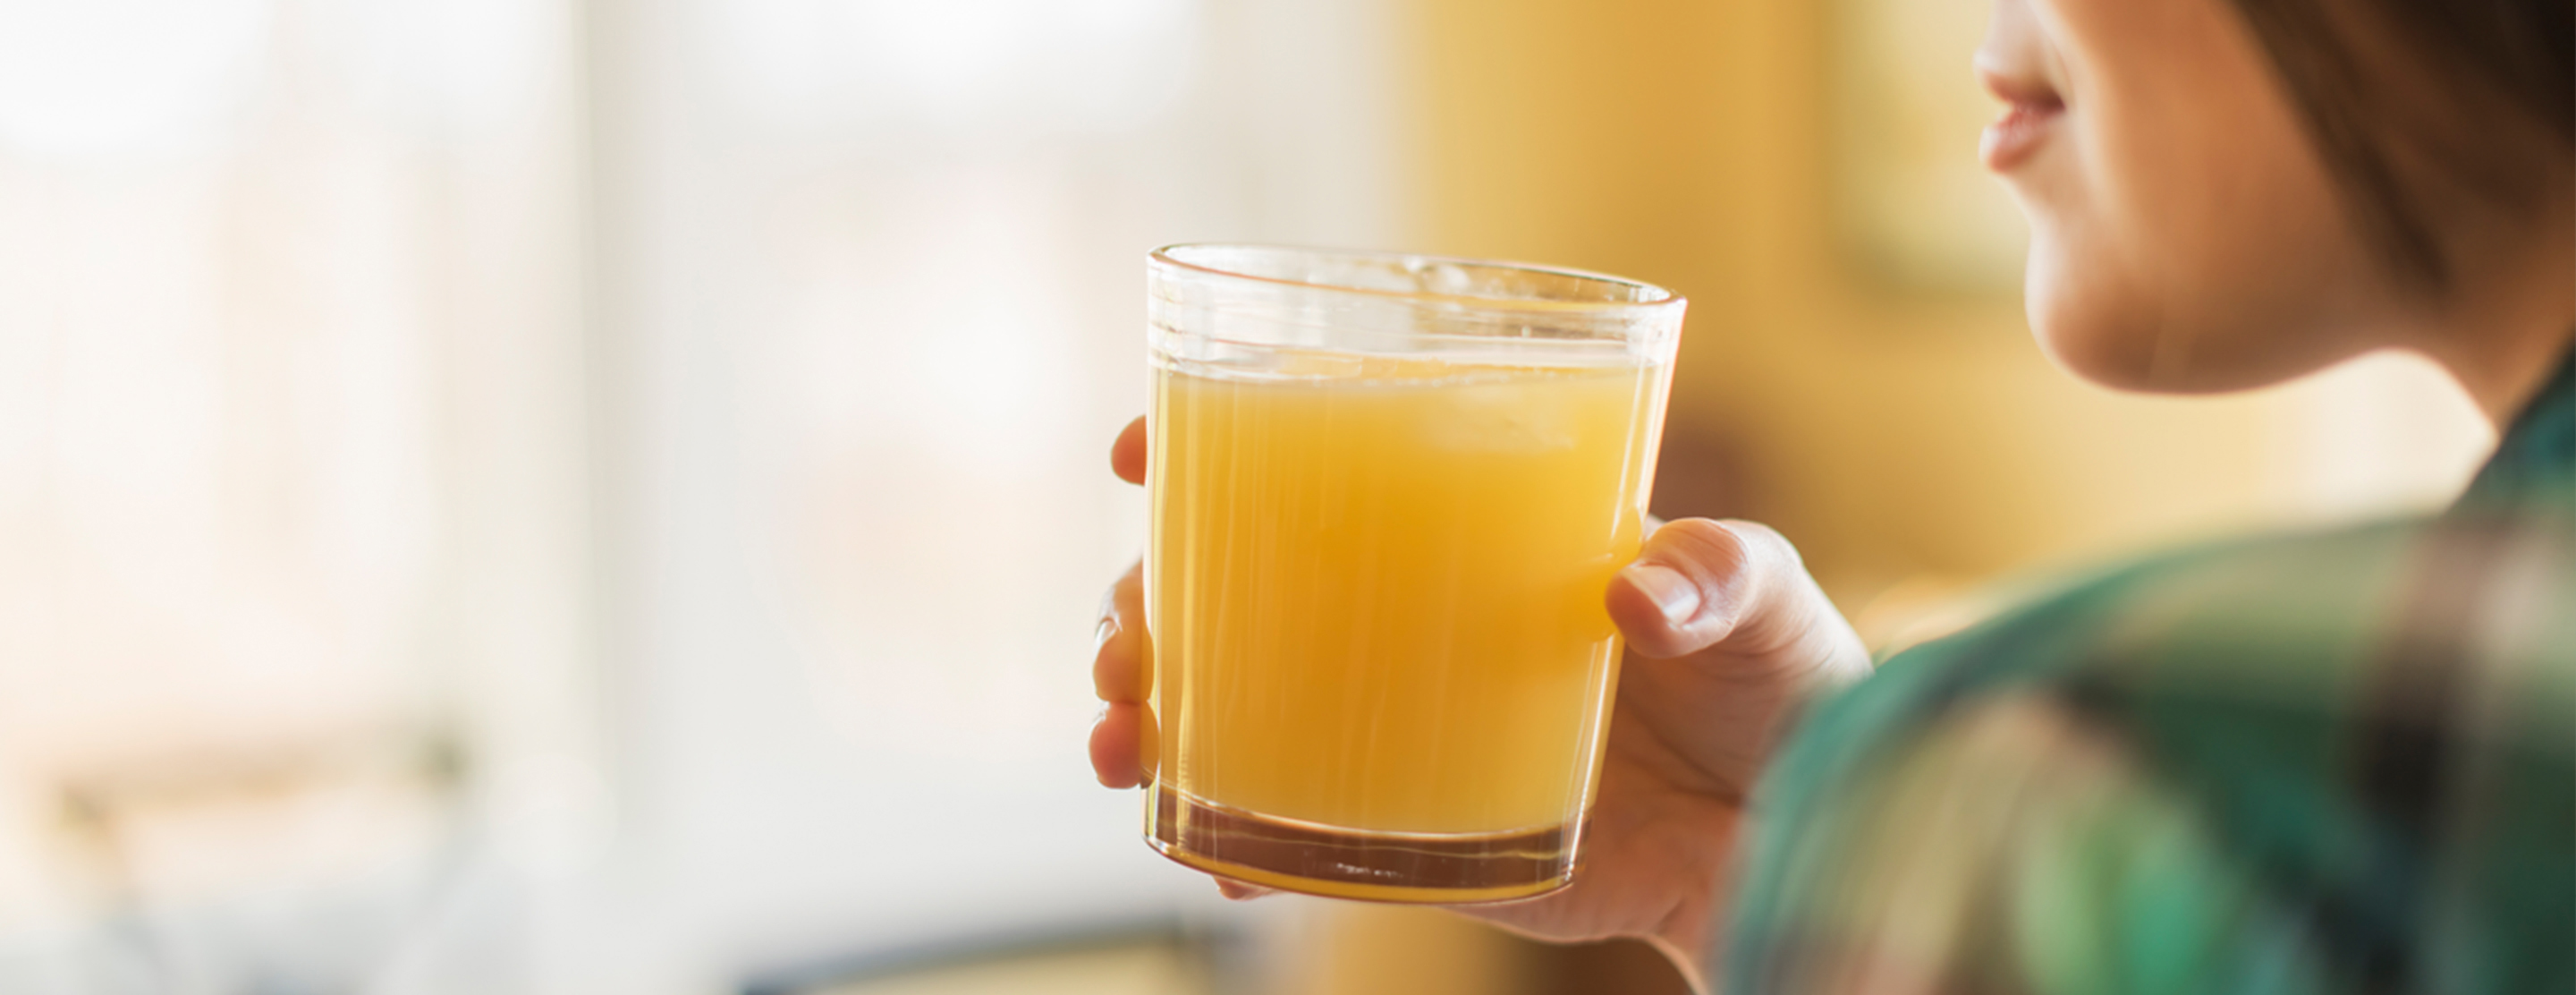 Does Orange Juice Raise Blood Sugar? 